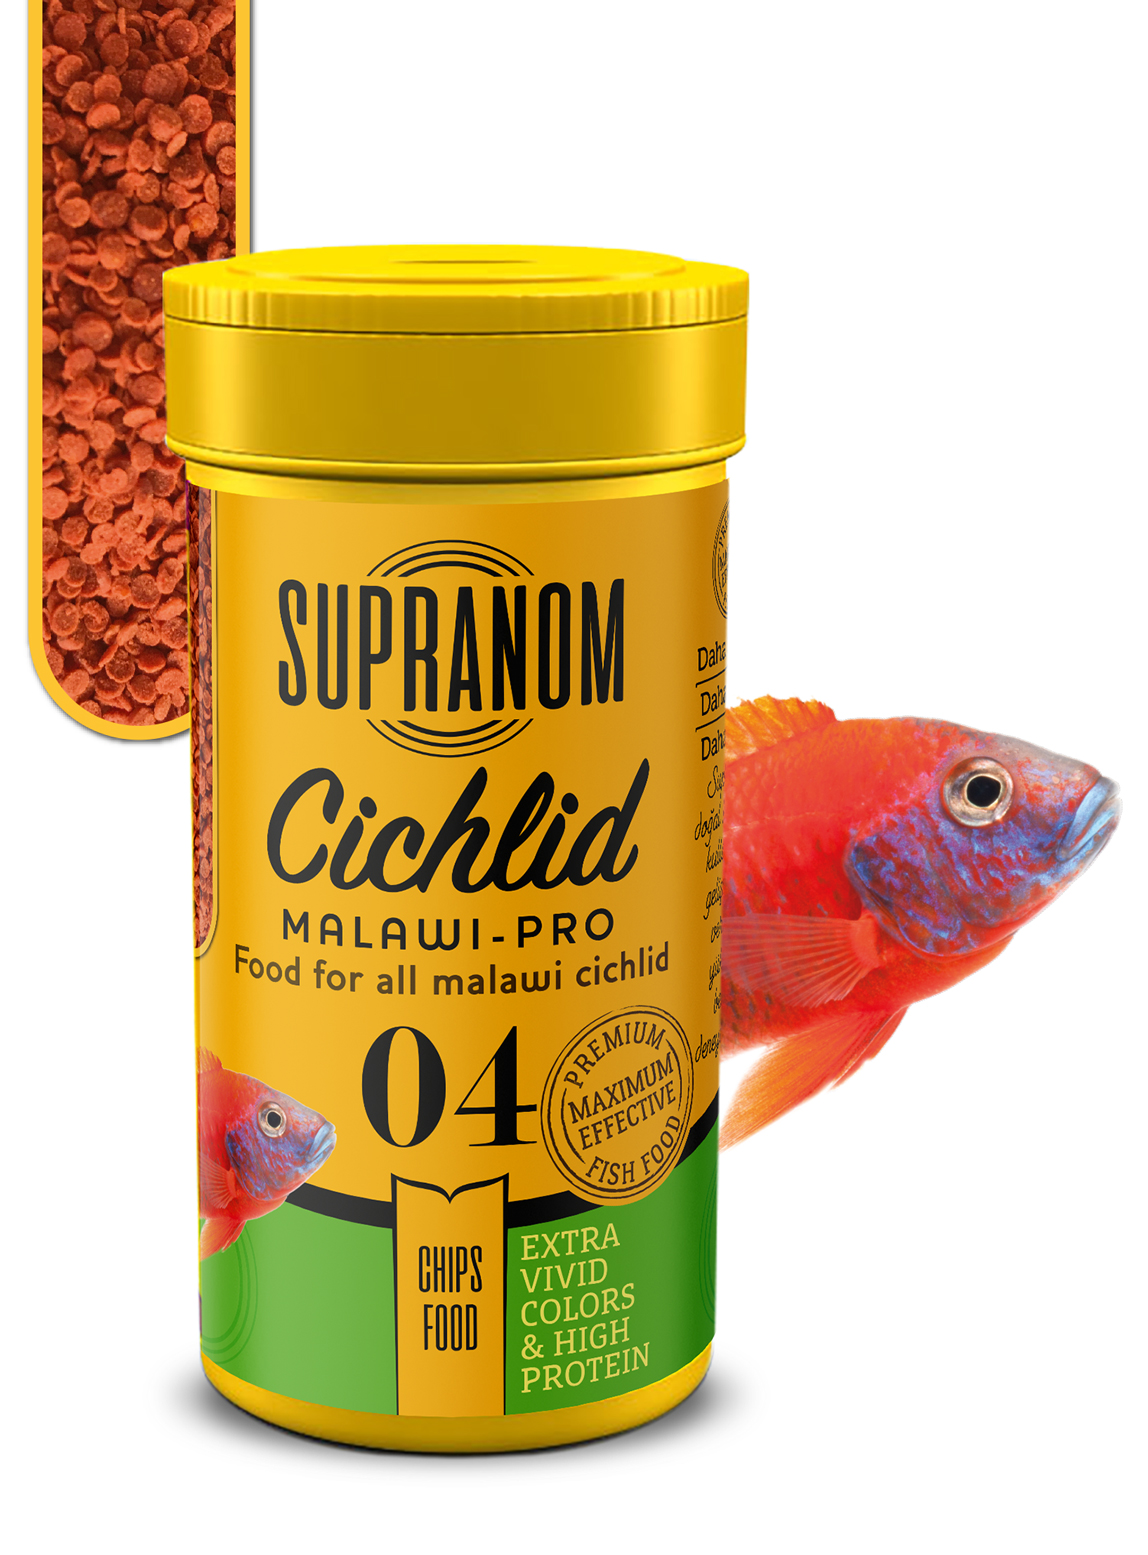 Supranom cichlid balık yemi malawi-pro chips food 100ml (04)-1